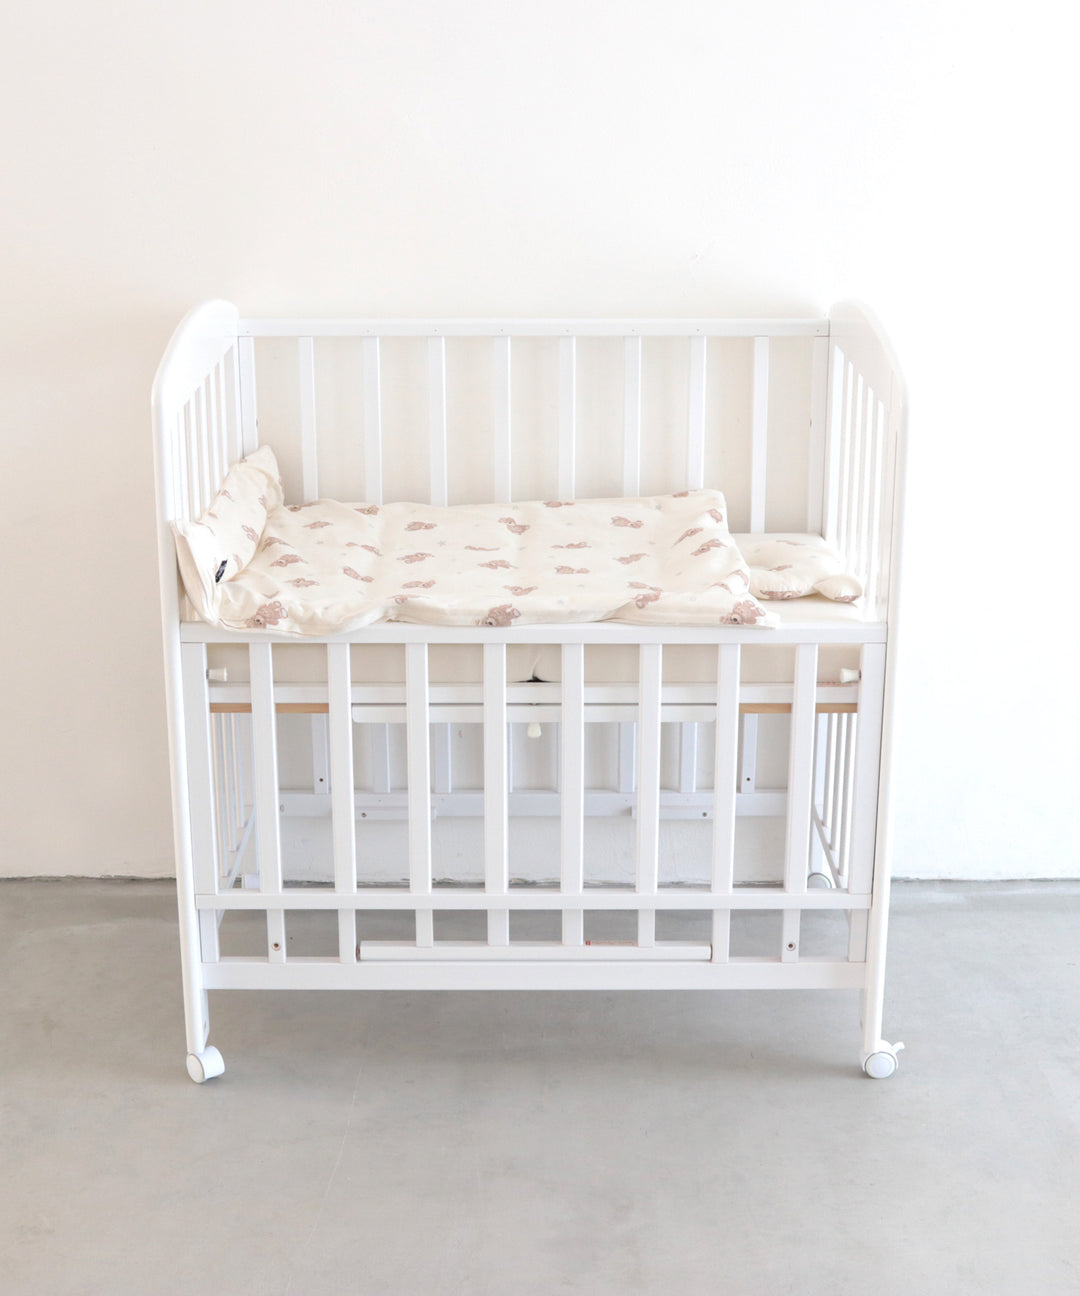 Washable Baby futon set (5 items) Mini size (Bear / Rabbit) Jersey knit